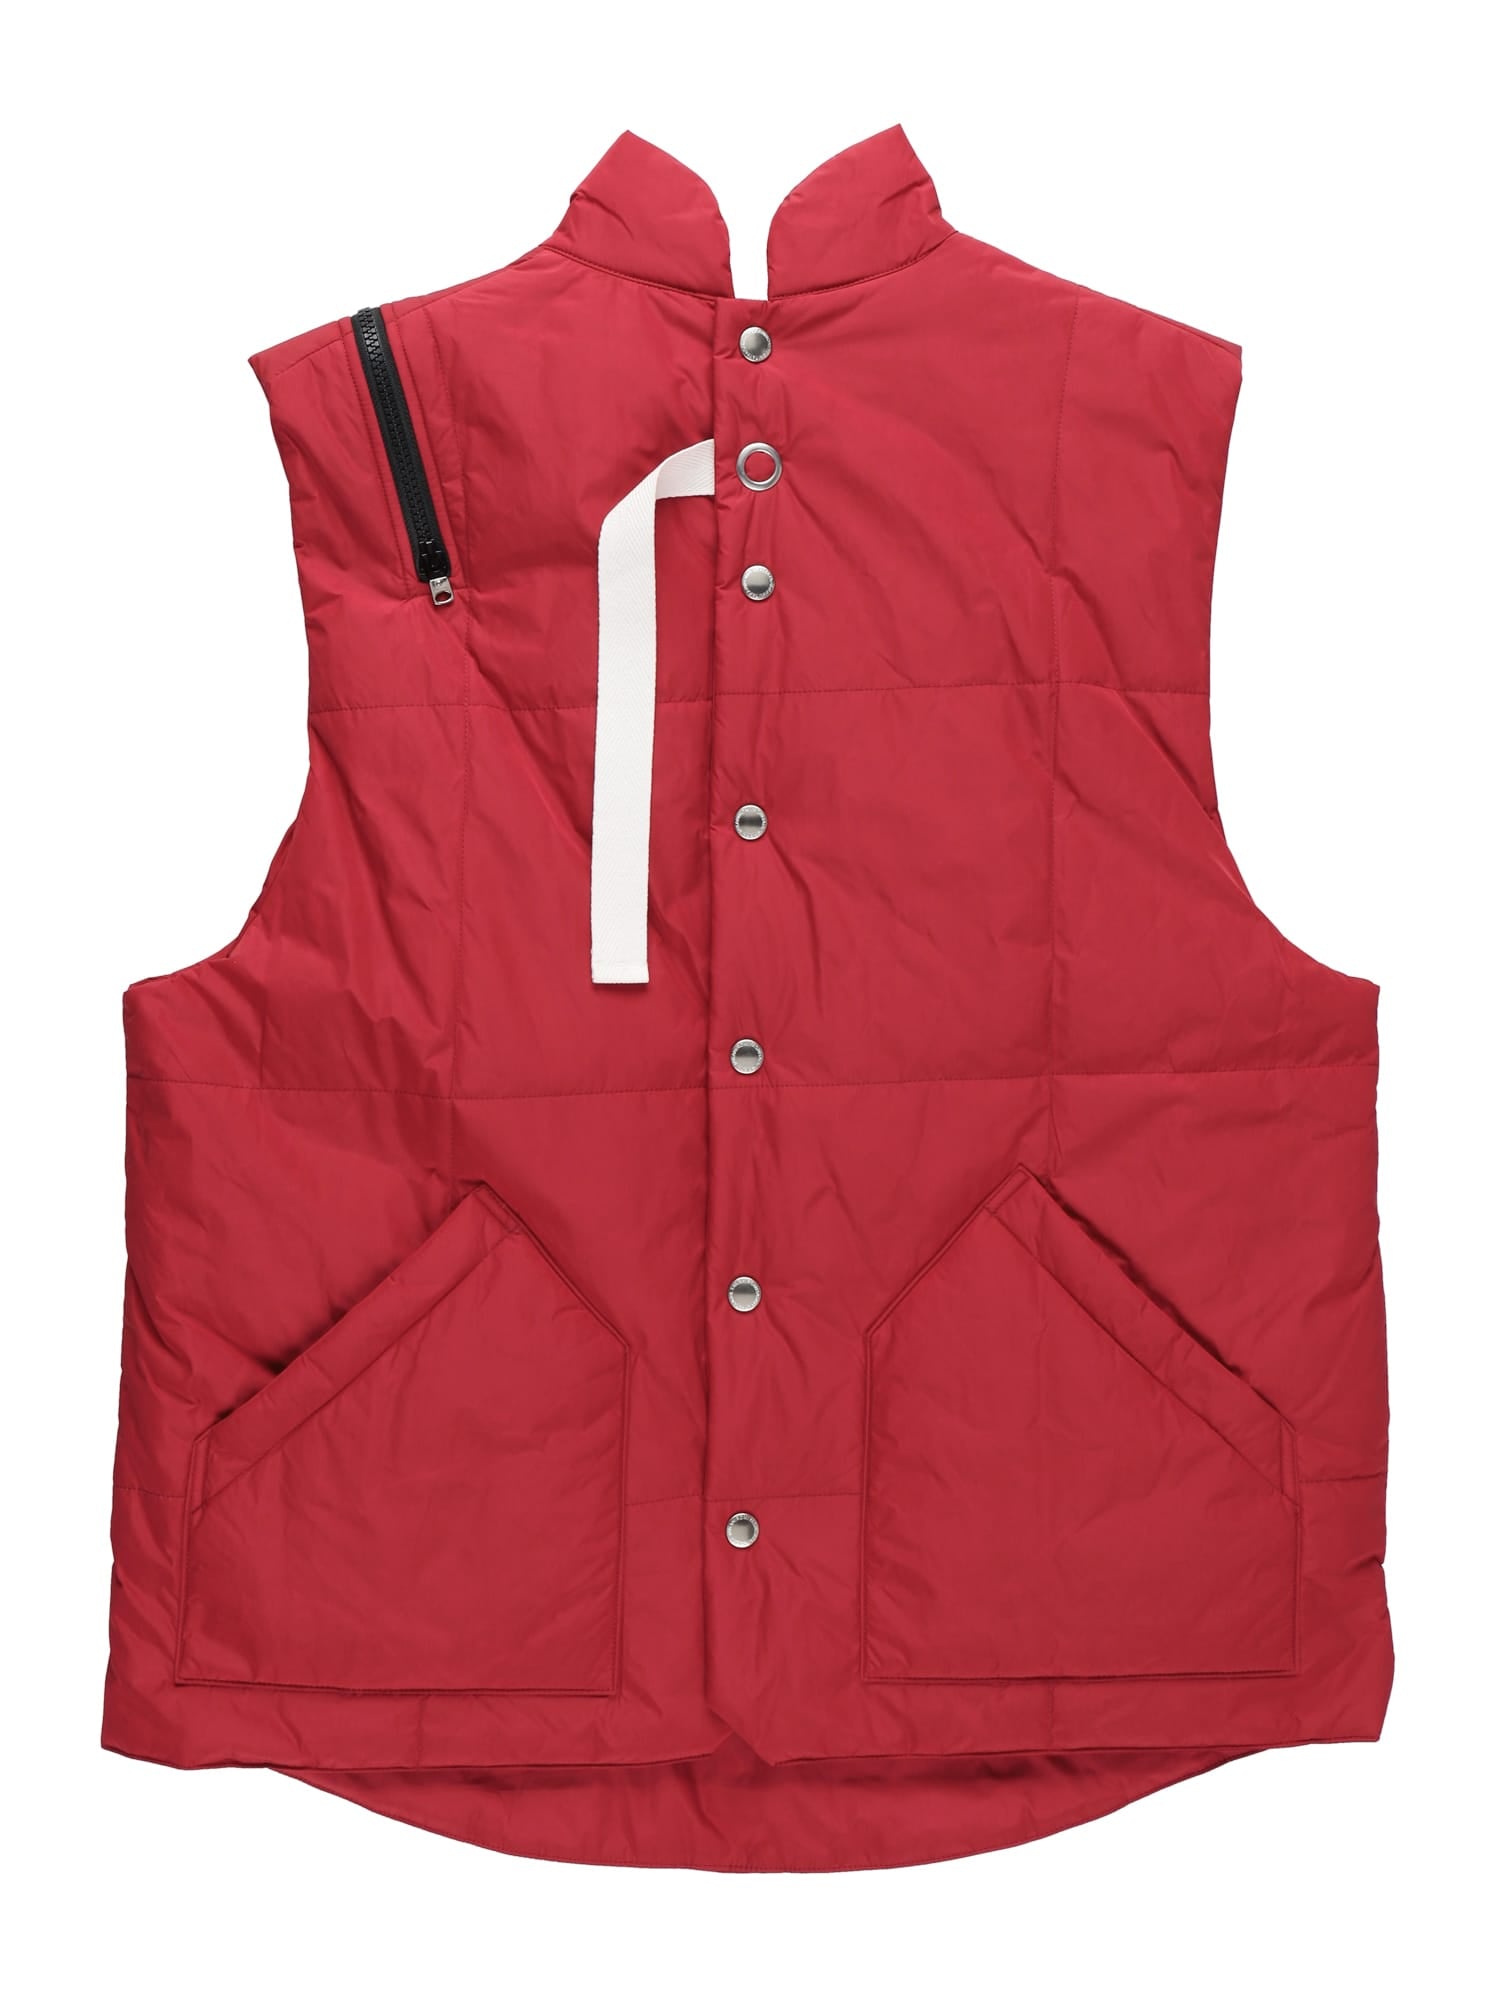 double zip reverse puffy vest.